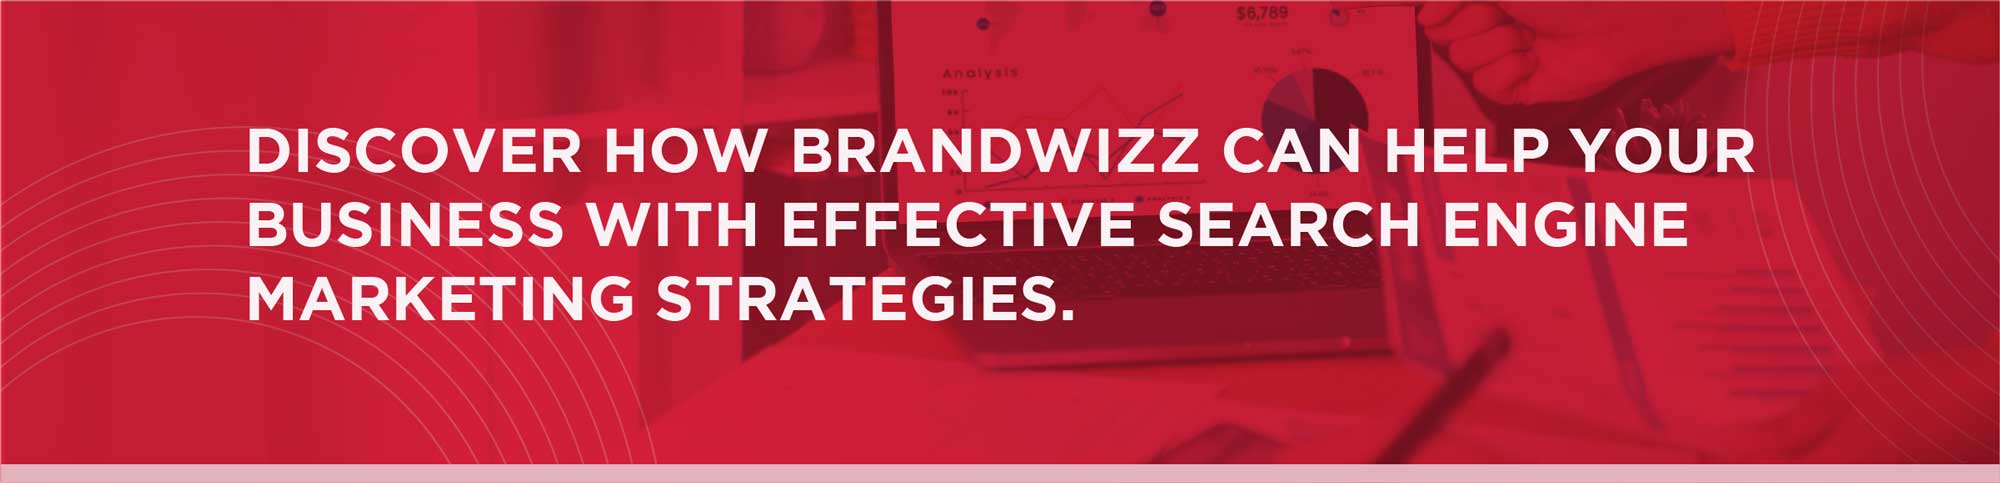 Brandwizz's Search Marketing Strategies Helping Businesses